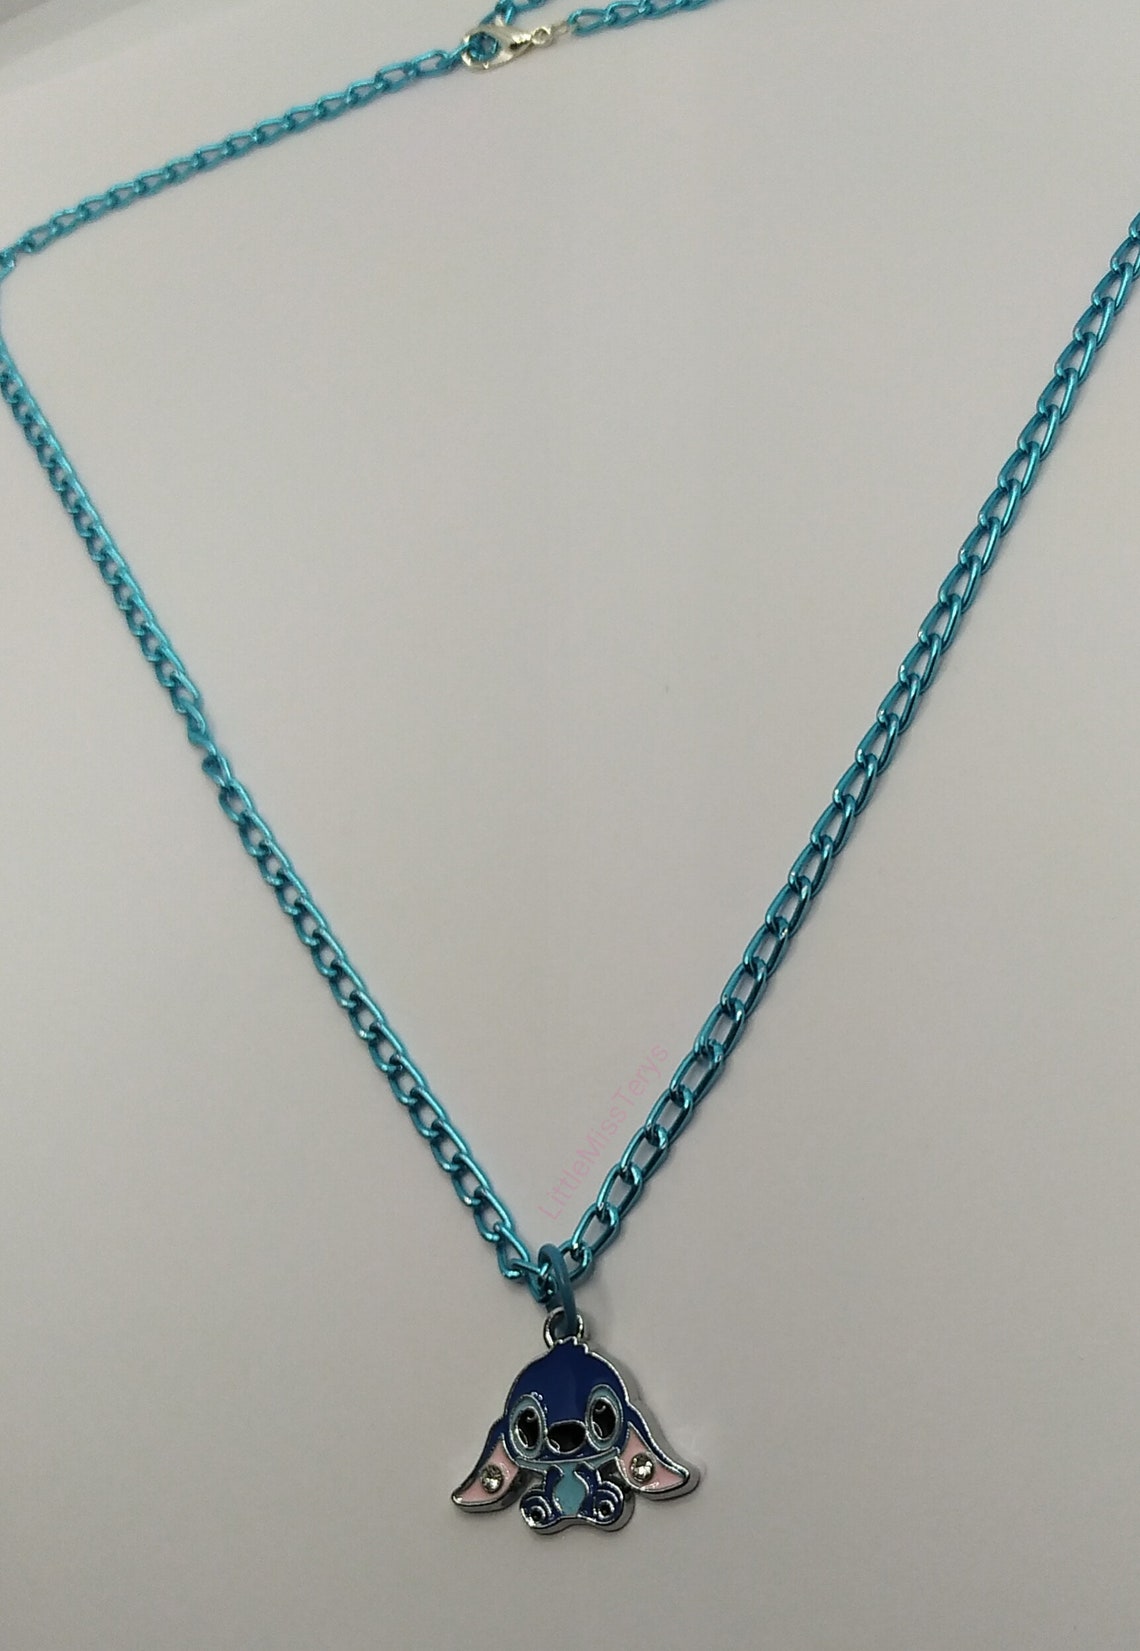 Stitch necklace lilo and stitch jewellery cute accessories | Etsy